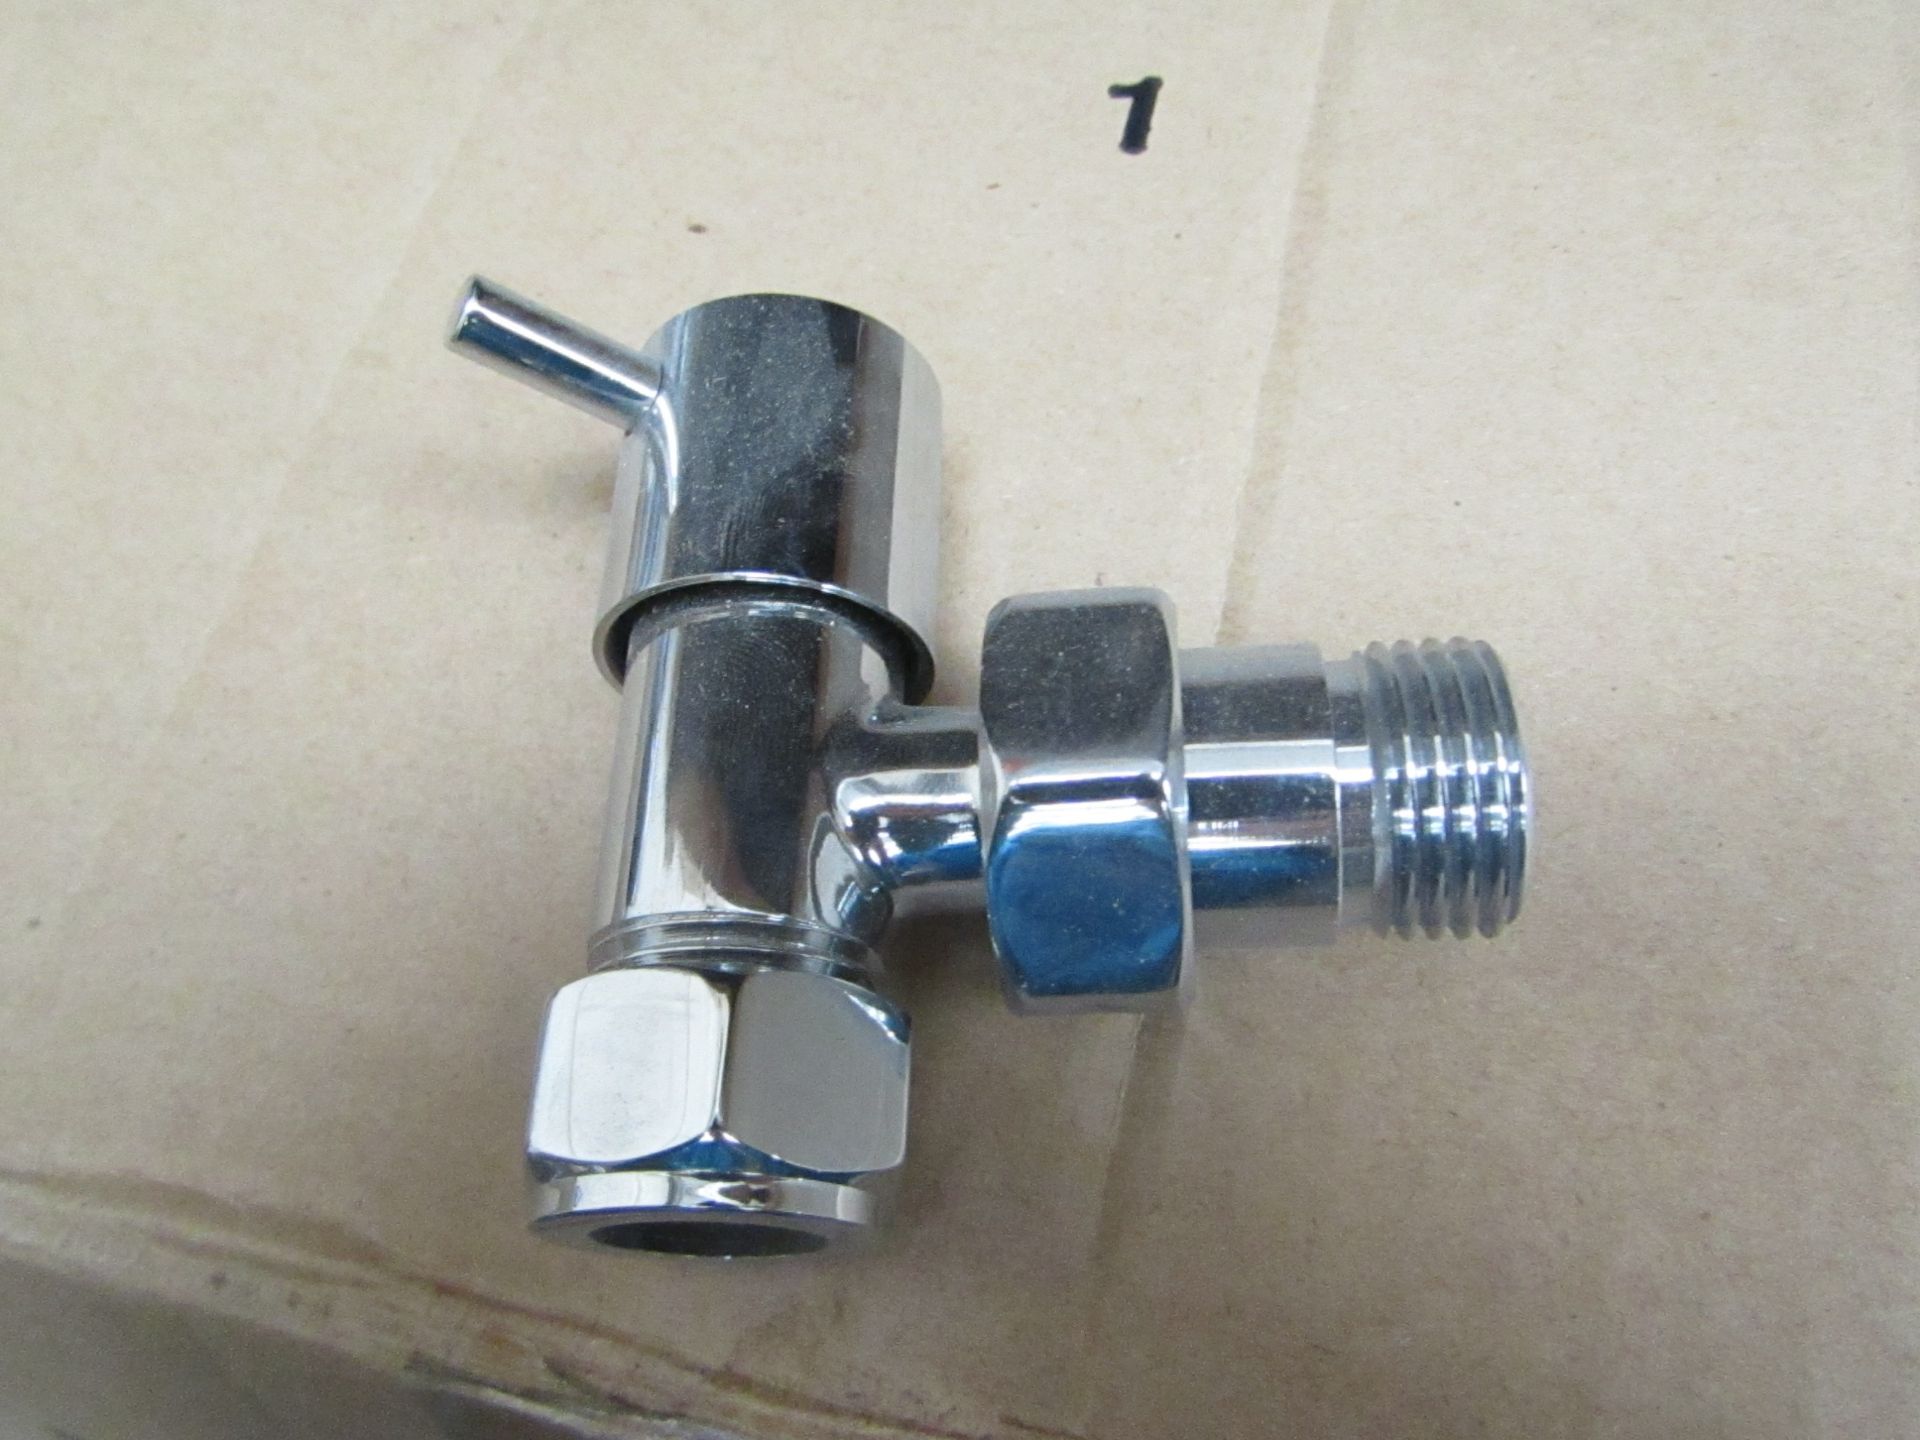 Pair of Westco triangle radiator valves, boxed and unused